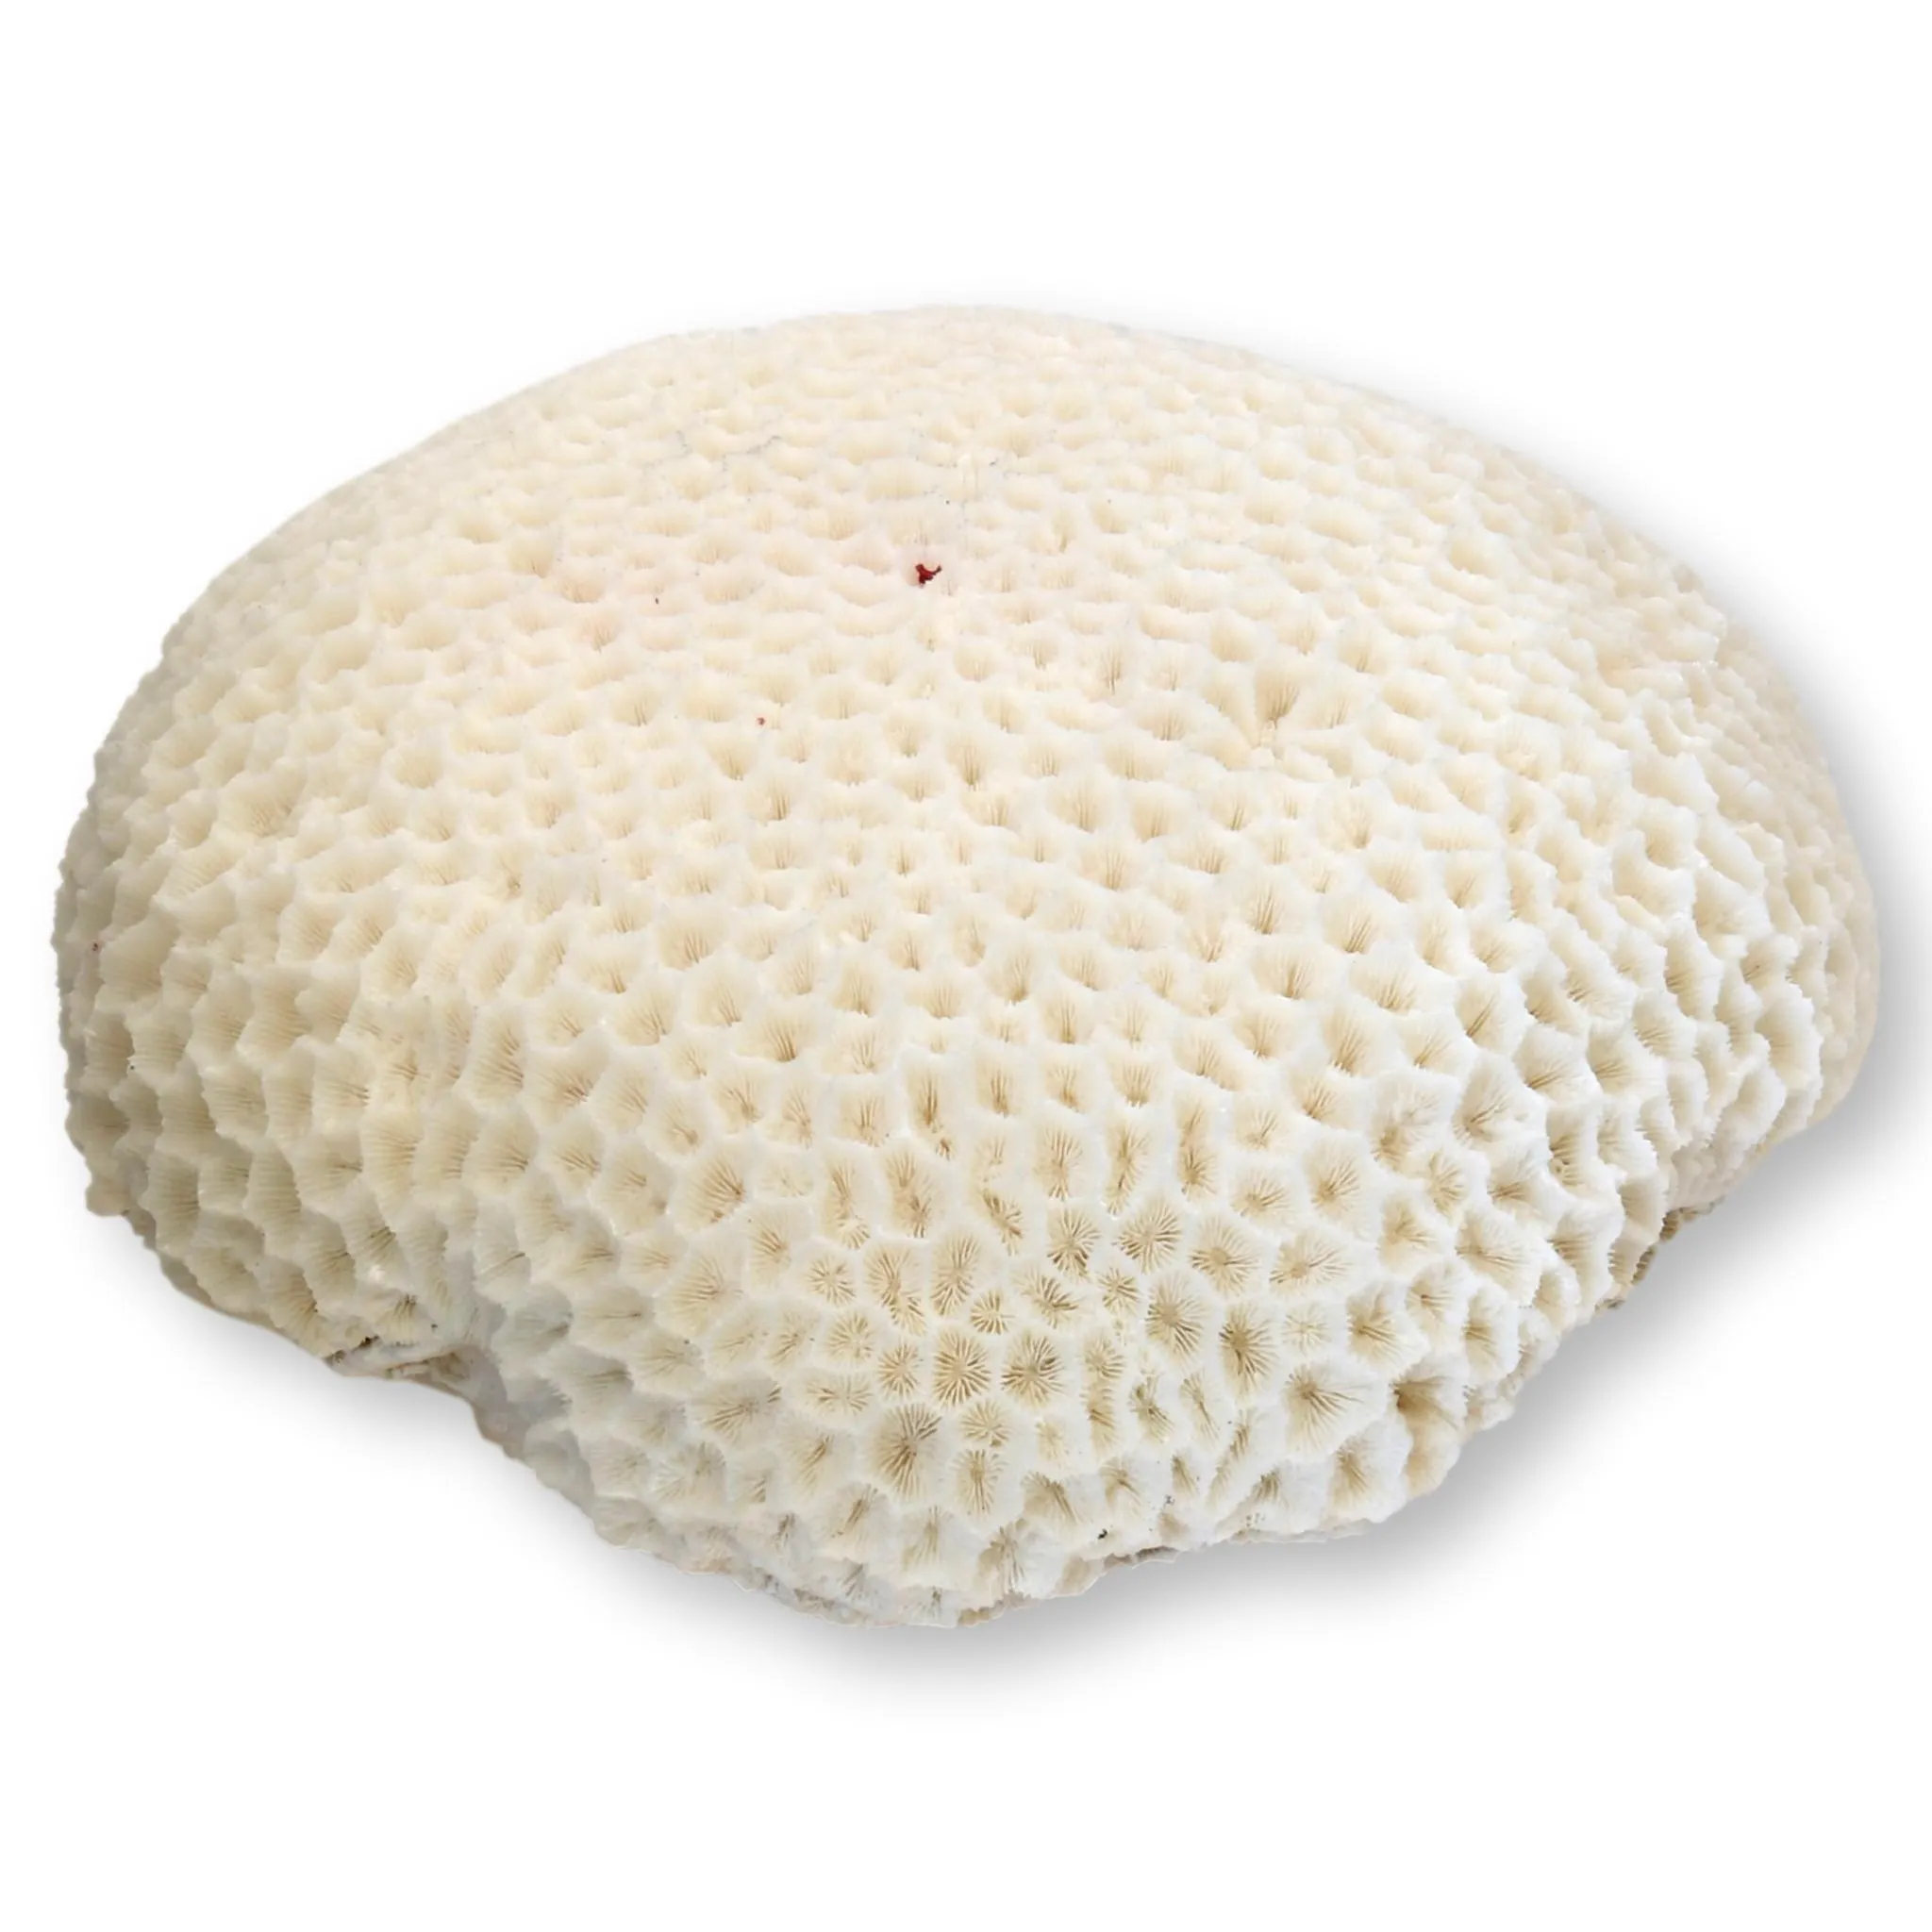 Large Brain Coral Speciman - Rose Victoria - White